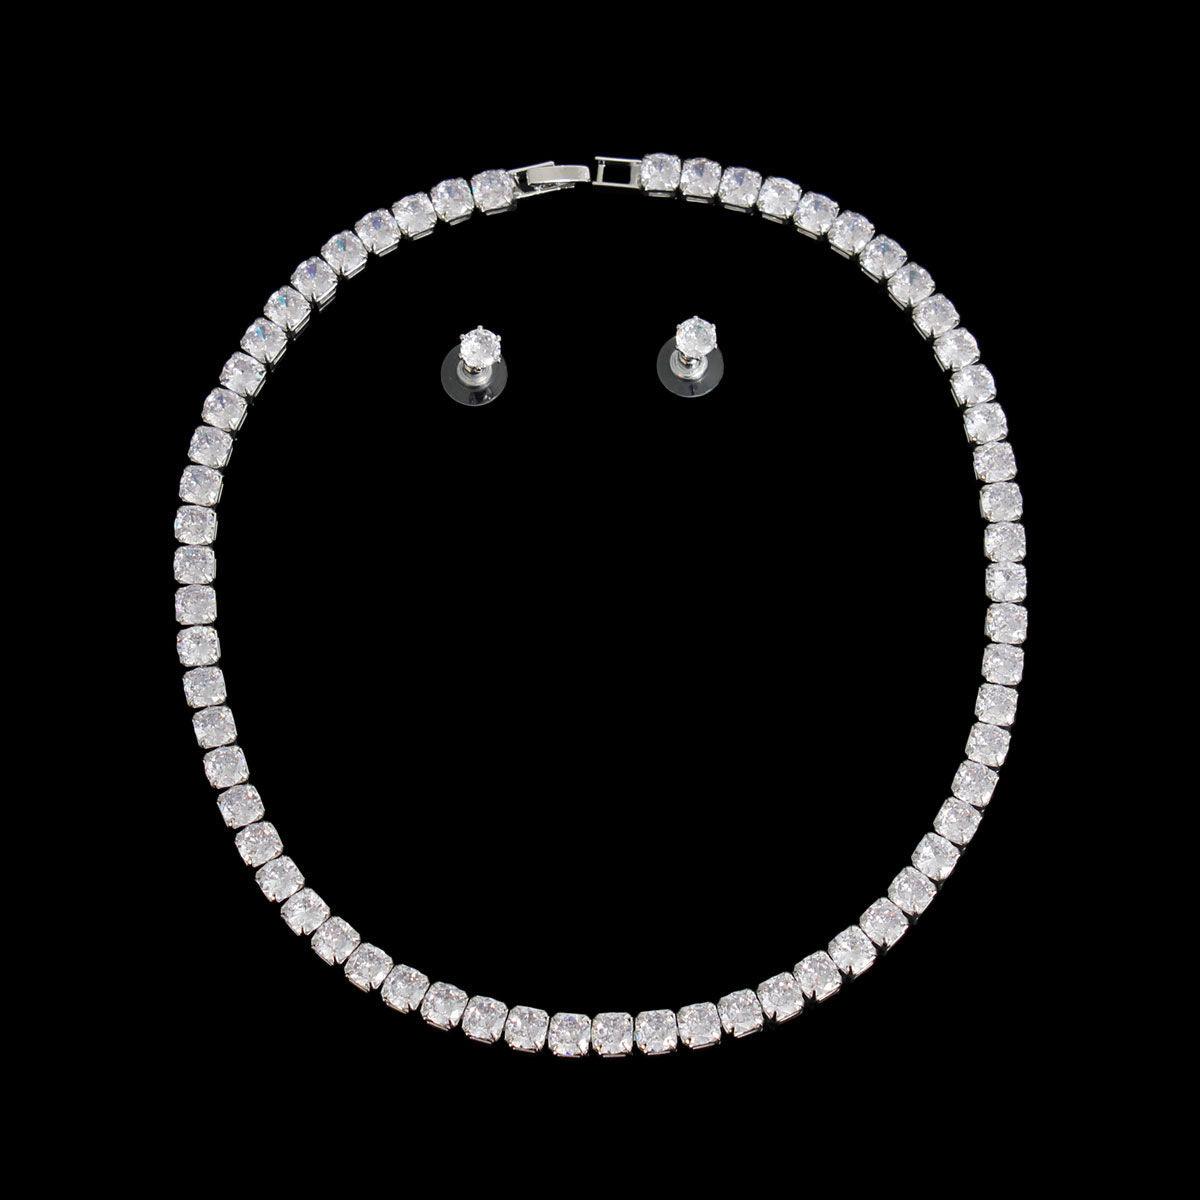 Stunning Tennis Choker Necklace: Rhodium Plated & Sparkling Stones